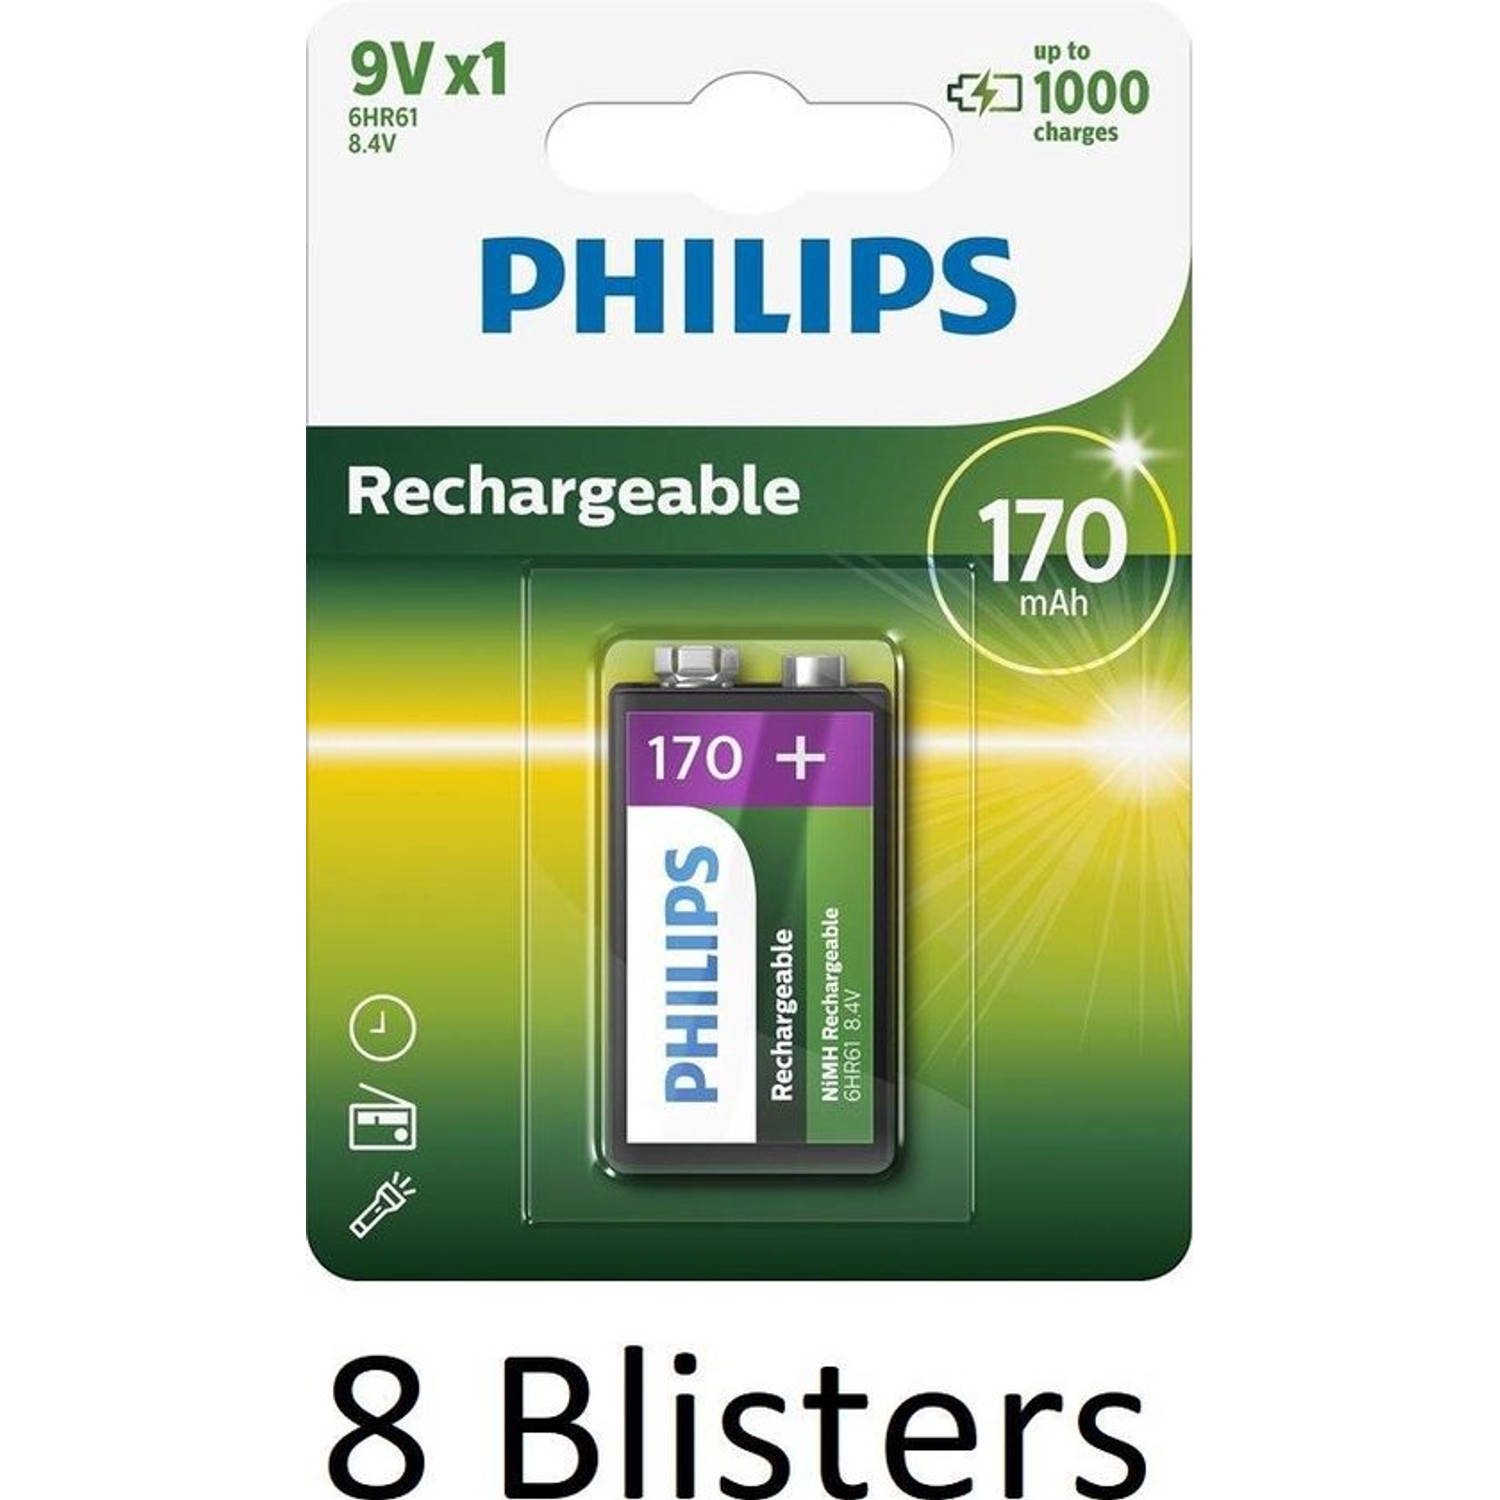 8 Stuks (8 Blisters a 1 st) Philips Oplaadbare 9V batterij - 170mAh